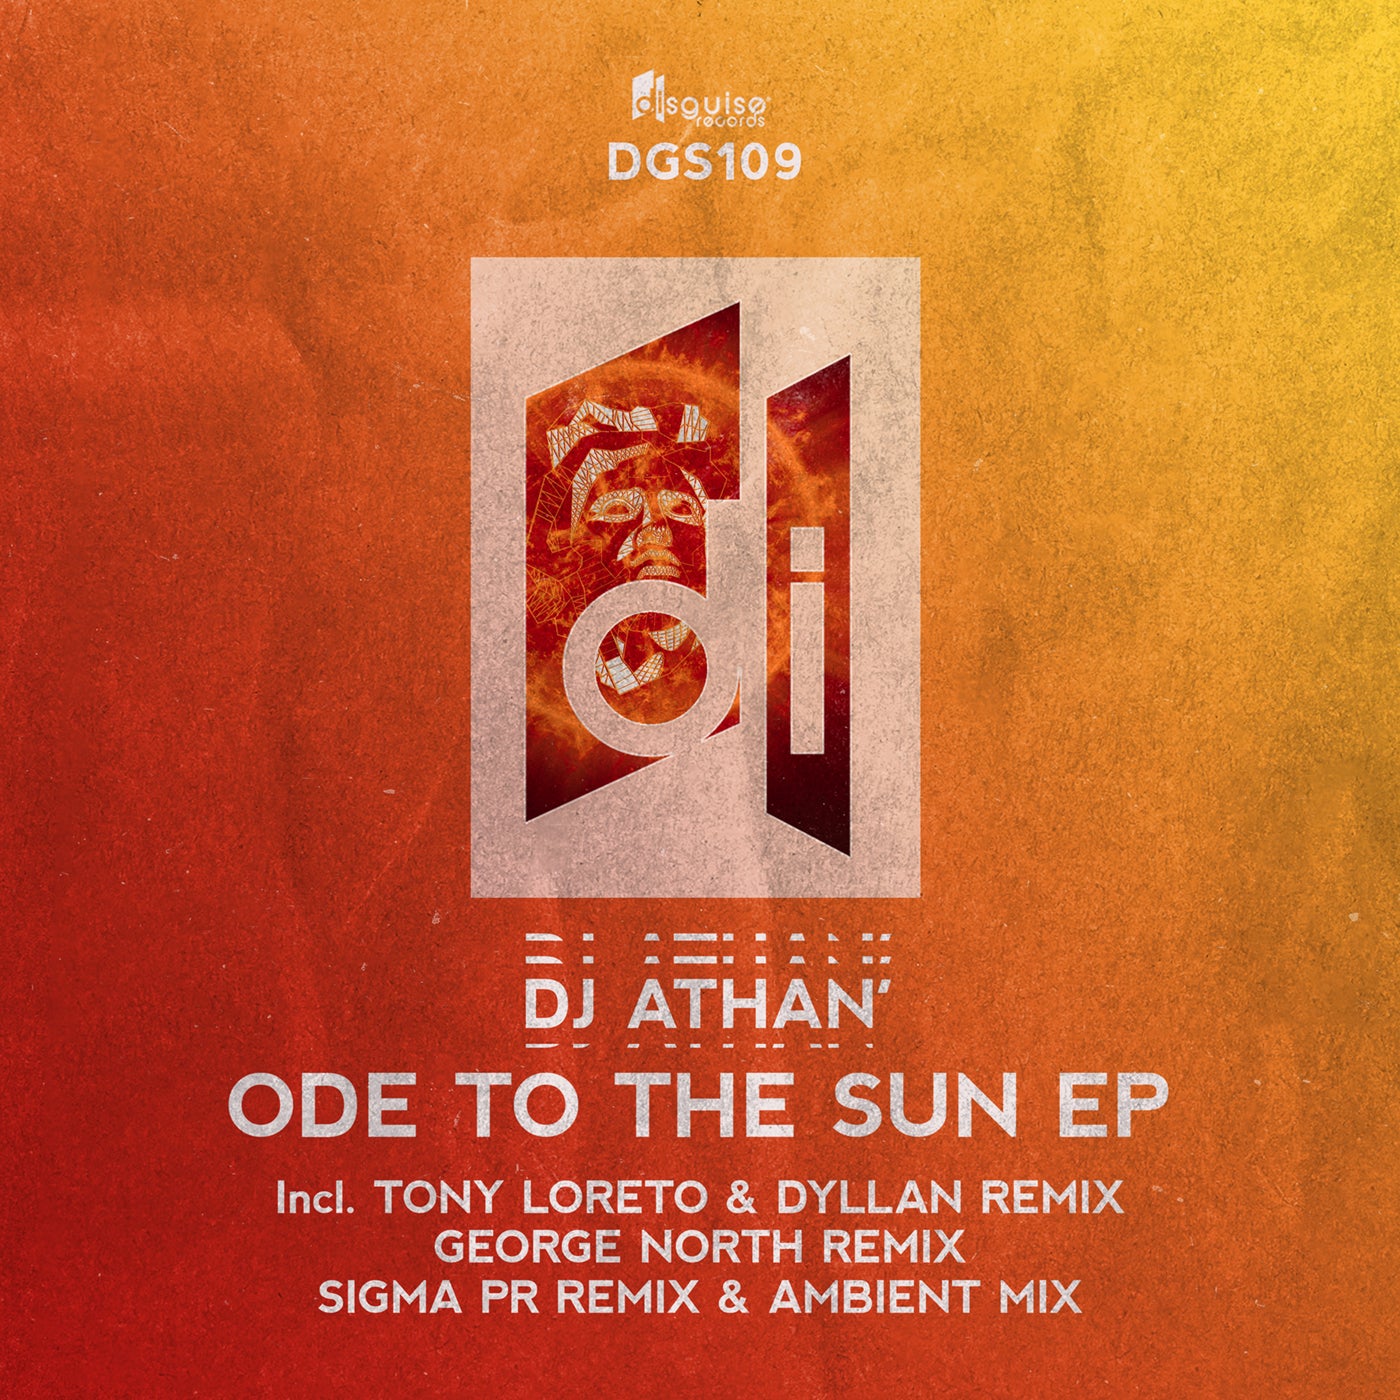 Dj Athan' - Ode To The Sun [DGS109]